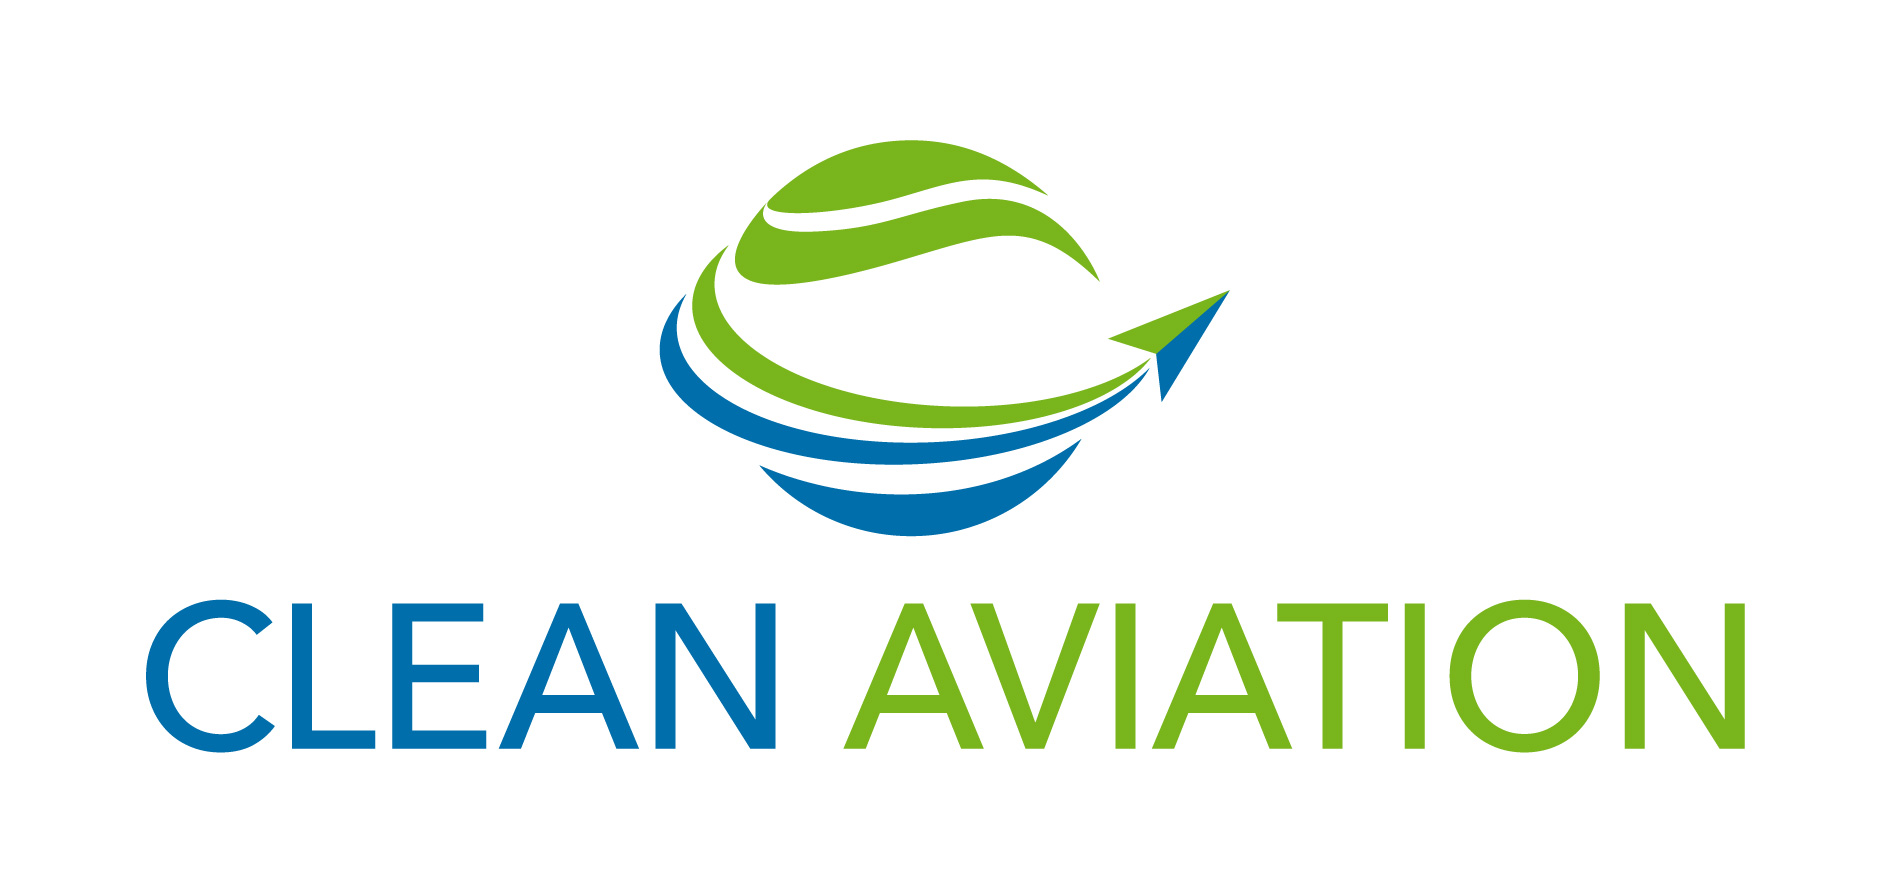 Clean Aviation